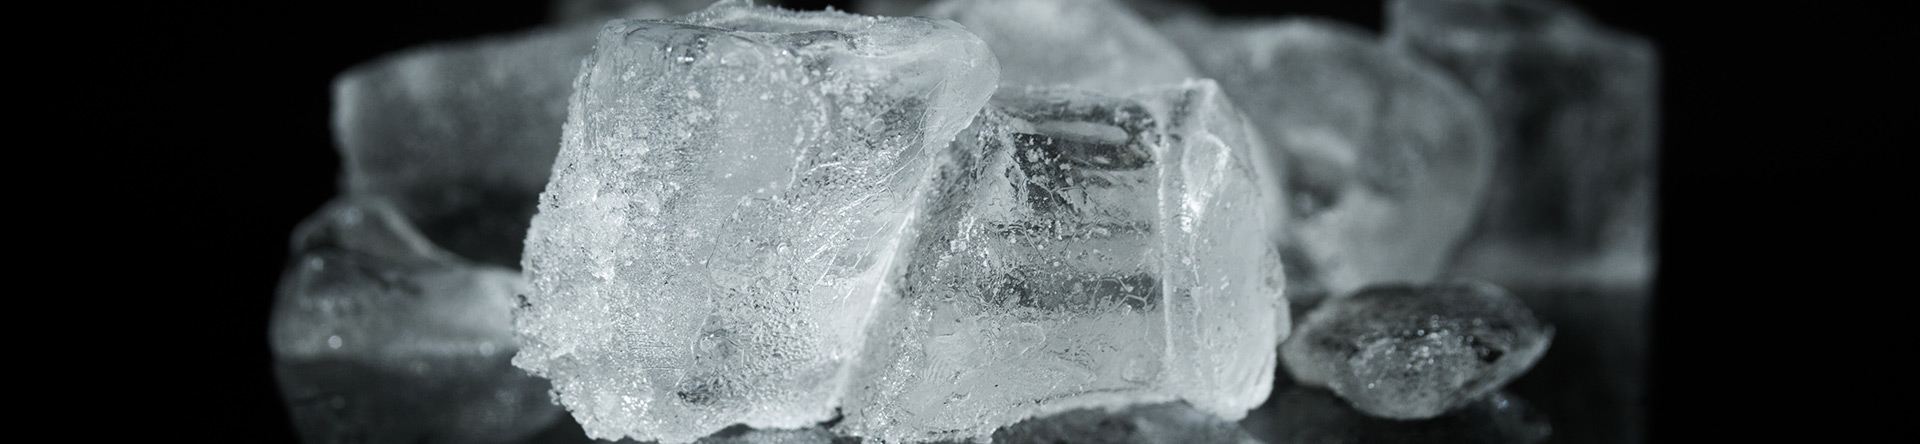 ice-cubes1